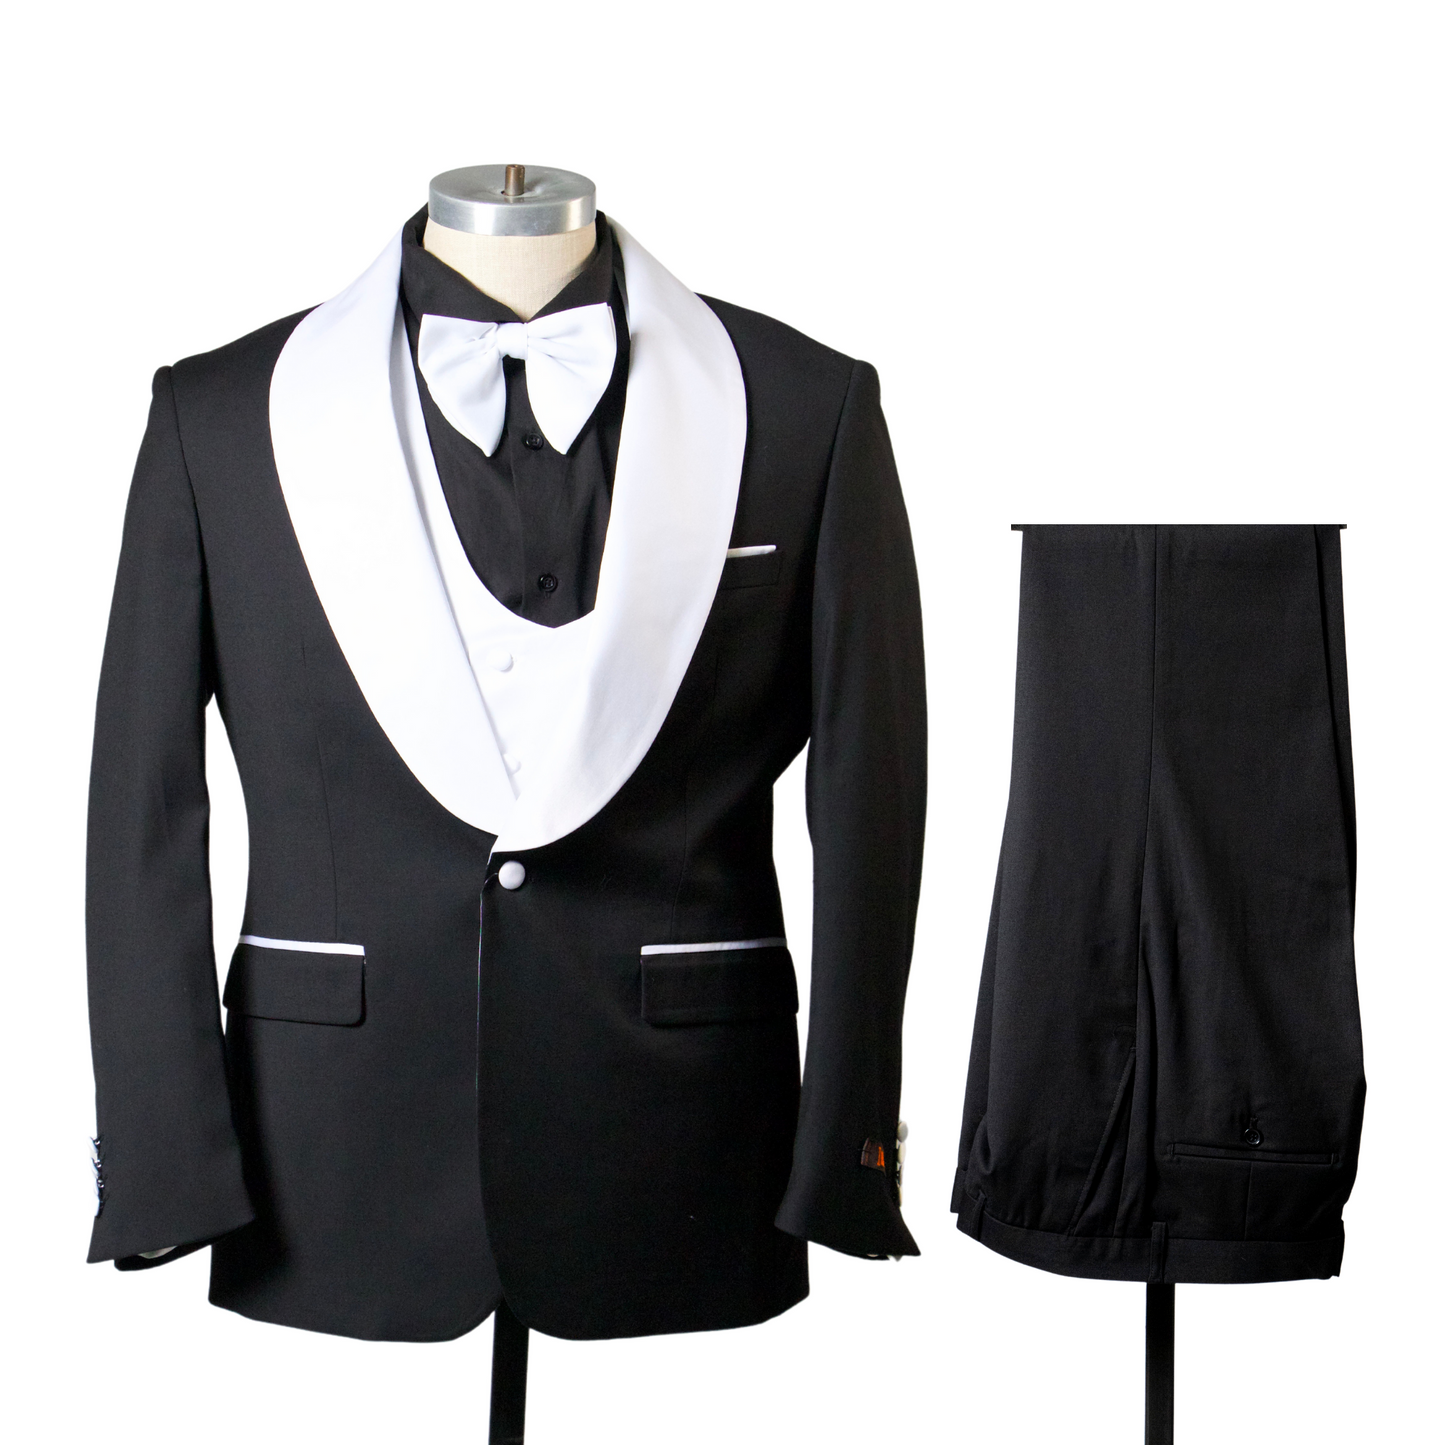 1 Button Shawl Lapel Tuxedo with Vest - Black & White